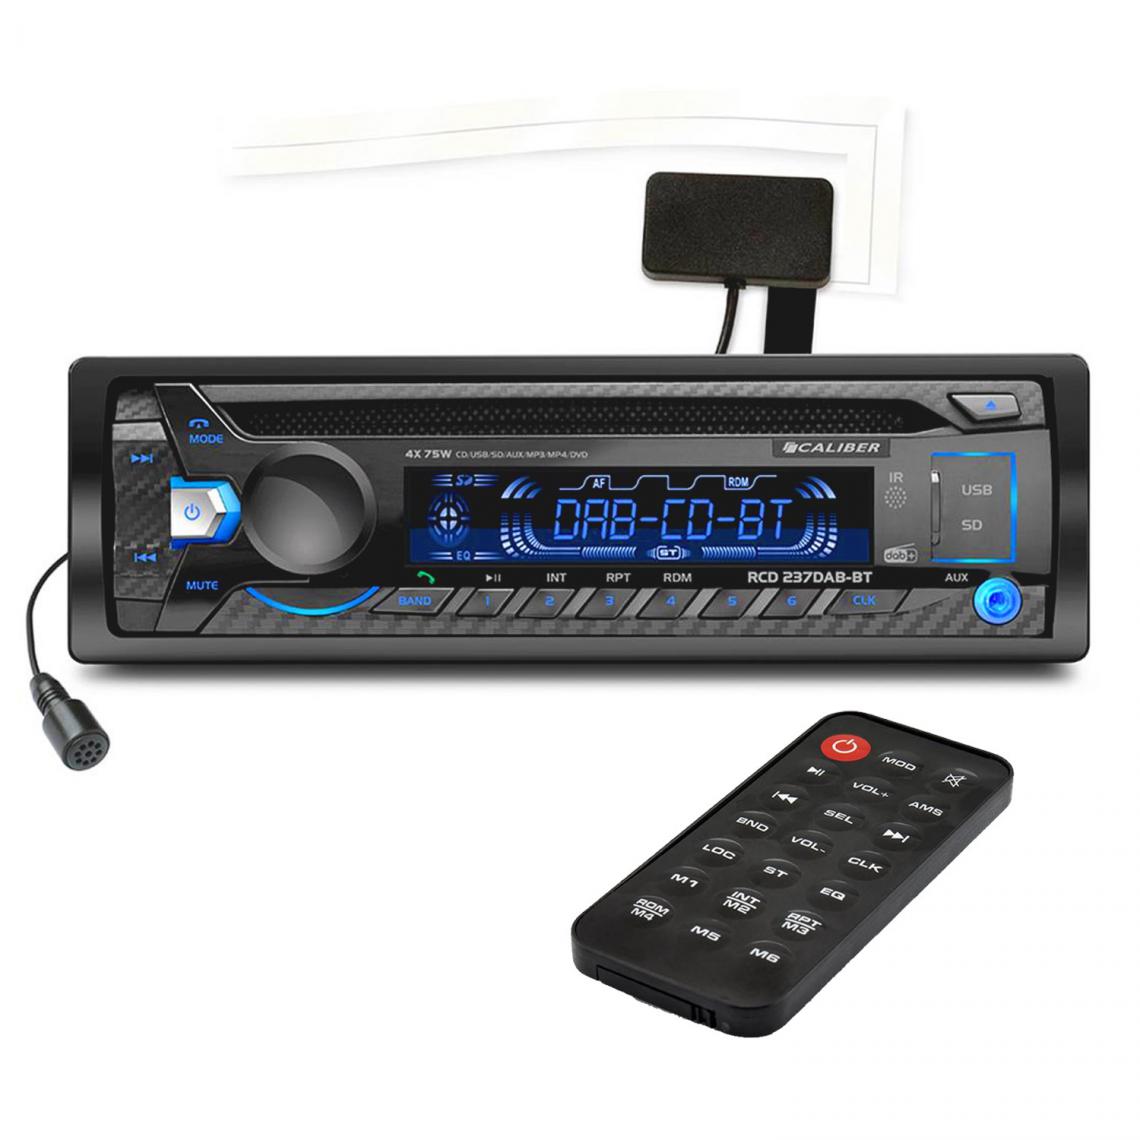 Caliber - Autoradio RGB Caliber RCD237DAB-BT - Radio, DAB, lecteur de cartes SD, USB - 4 x 75 watts - Radio